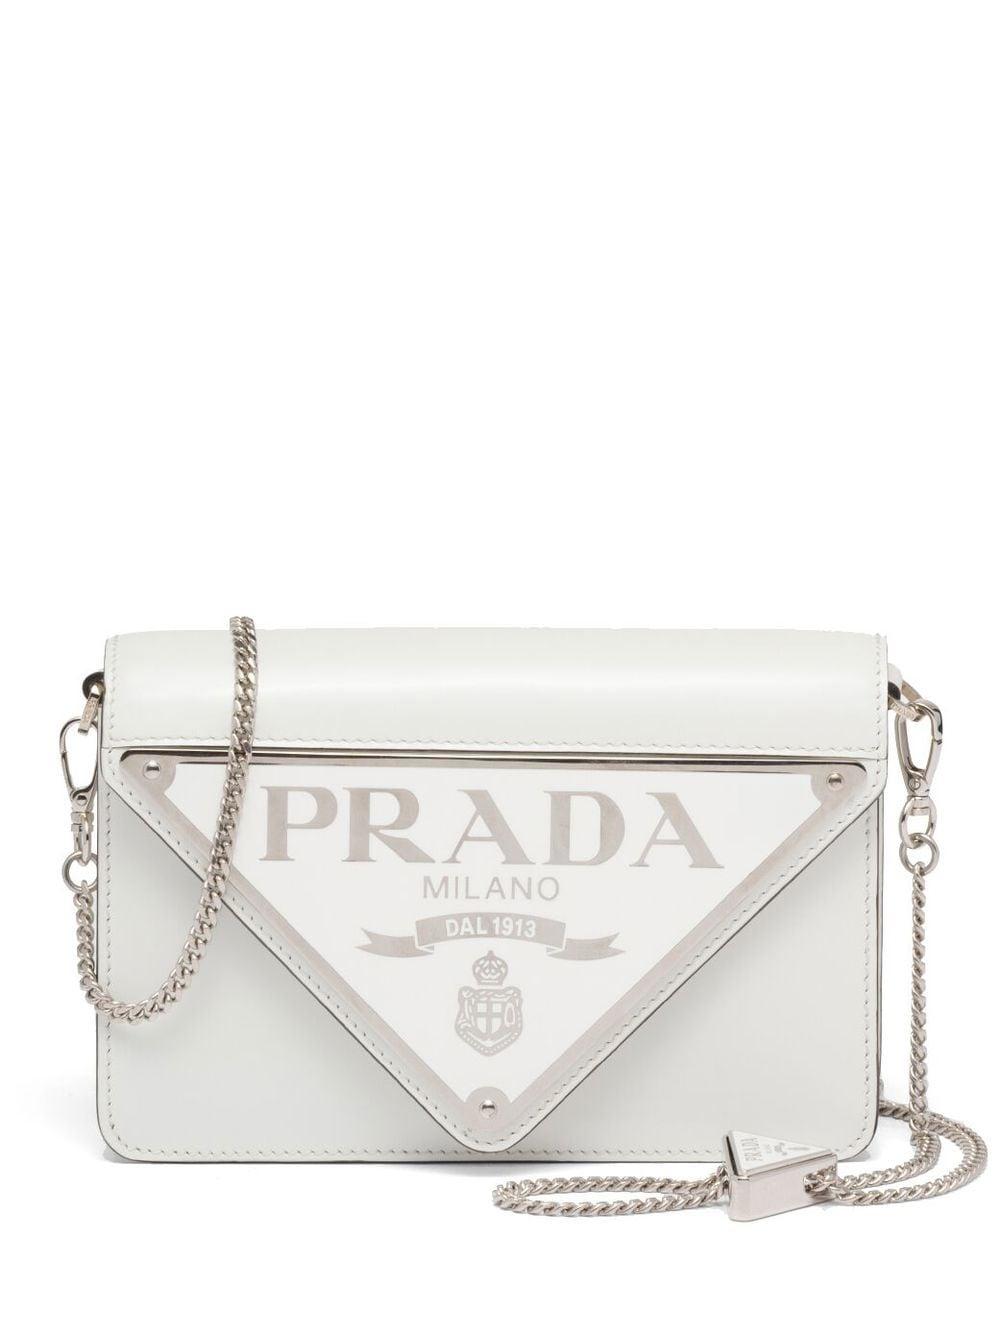 Prada Mini Borse Flap Shoulder Bag in White | Lyst